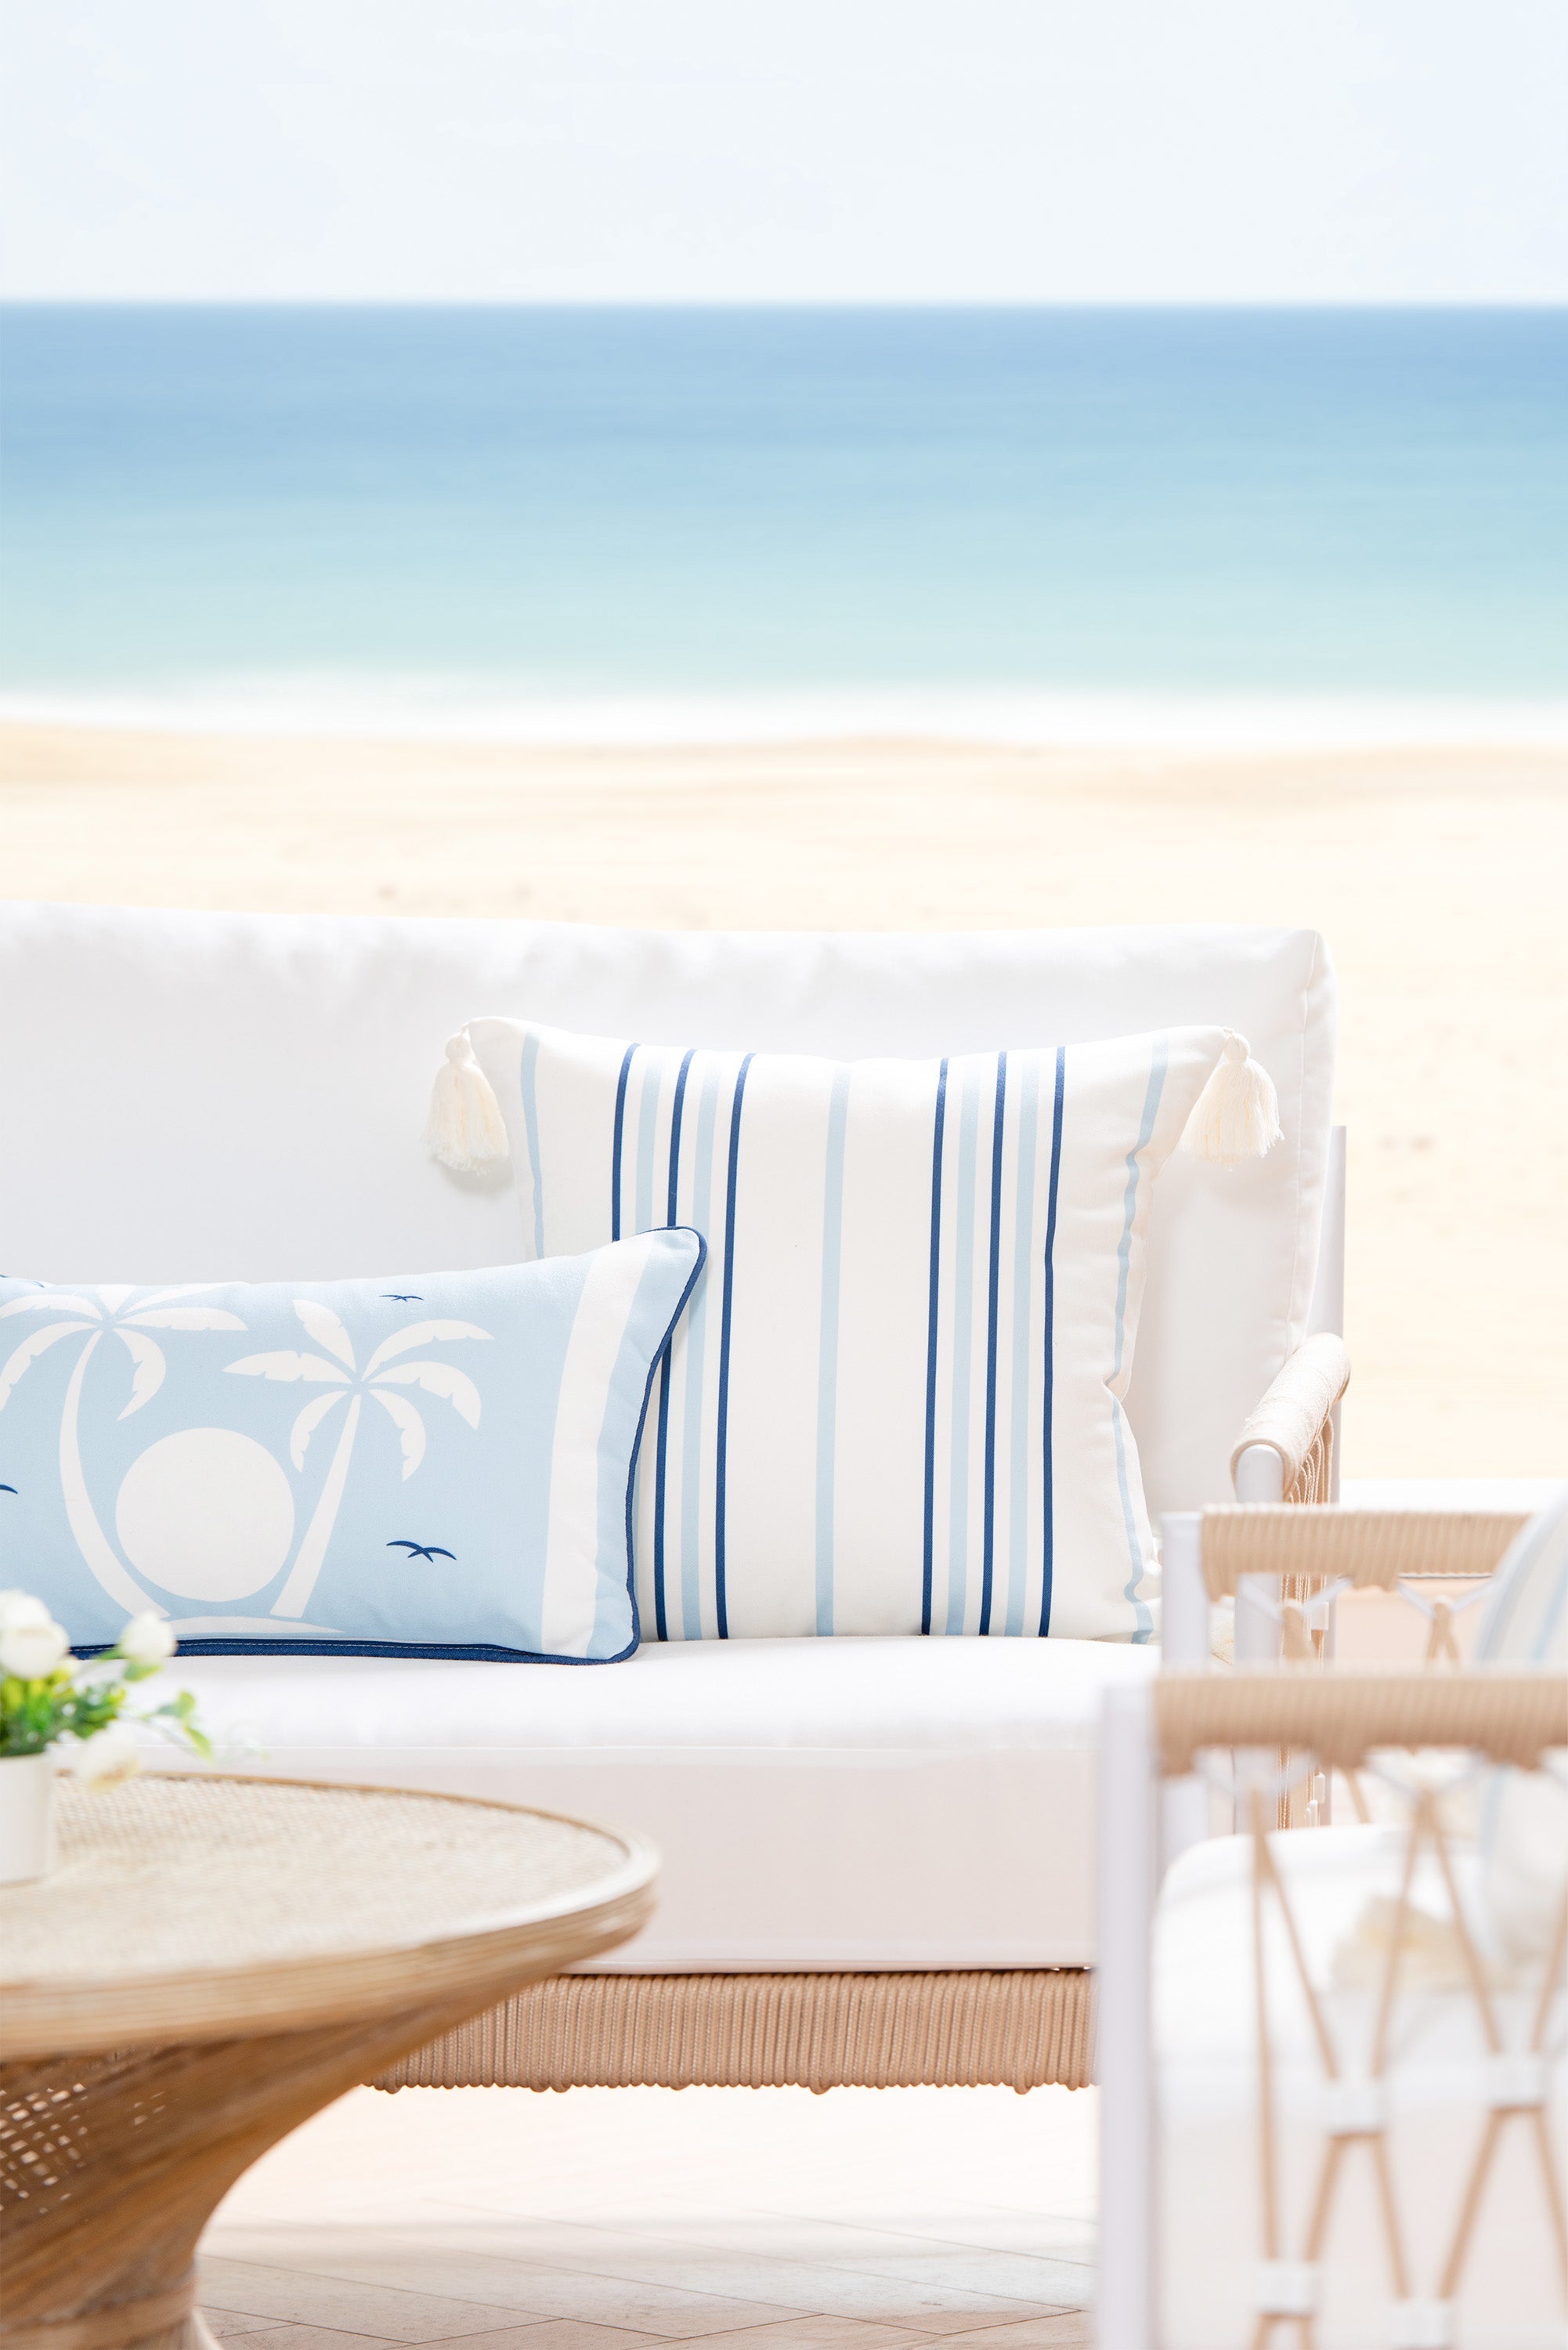 Coastal Hampton Style Indoor Outdoor Lumbar Pillow Cover, Palm Tree, Baby Blue Navy, 12"x20"